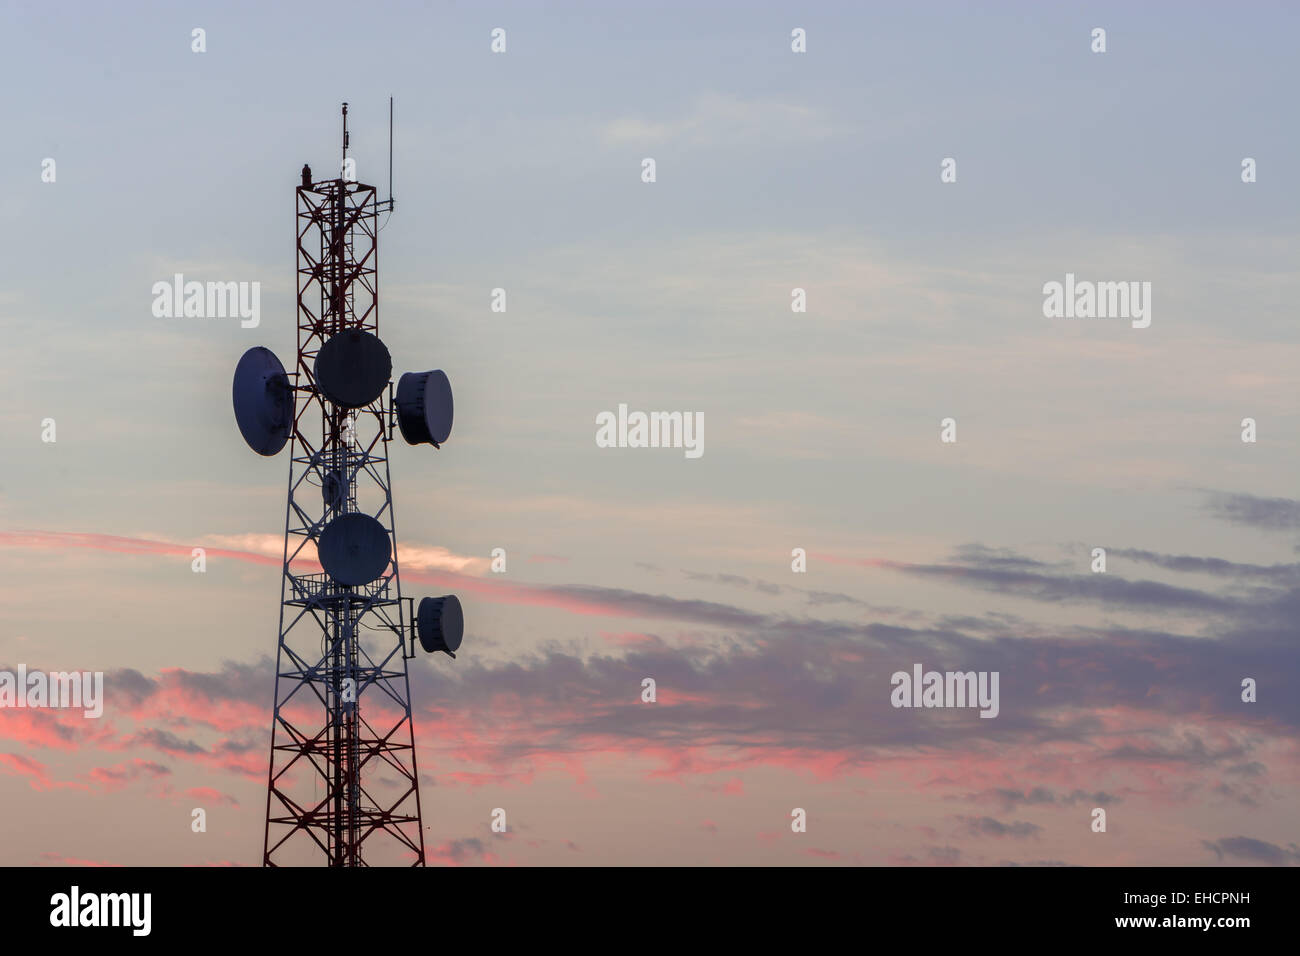 Telekommunikation-Turmstruktur mit Sonnenuntergang Himmelshintergrund Stockfoto